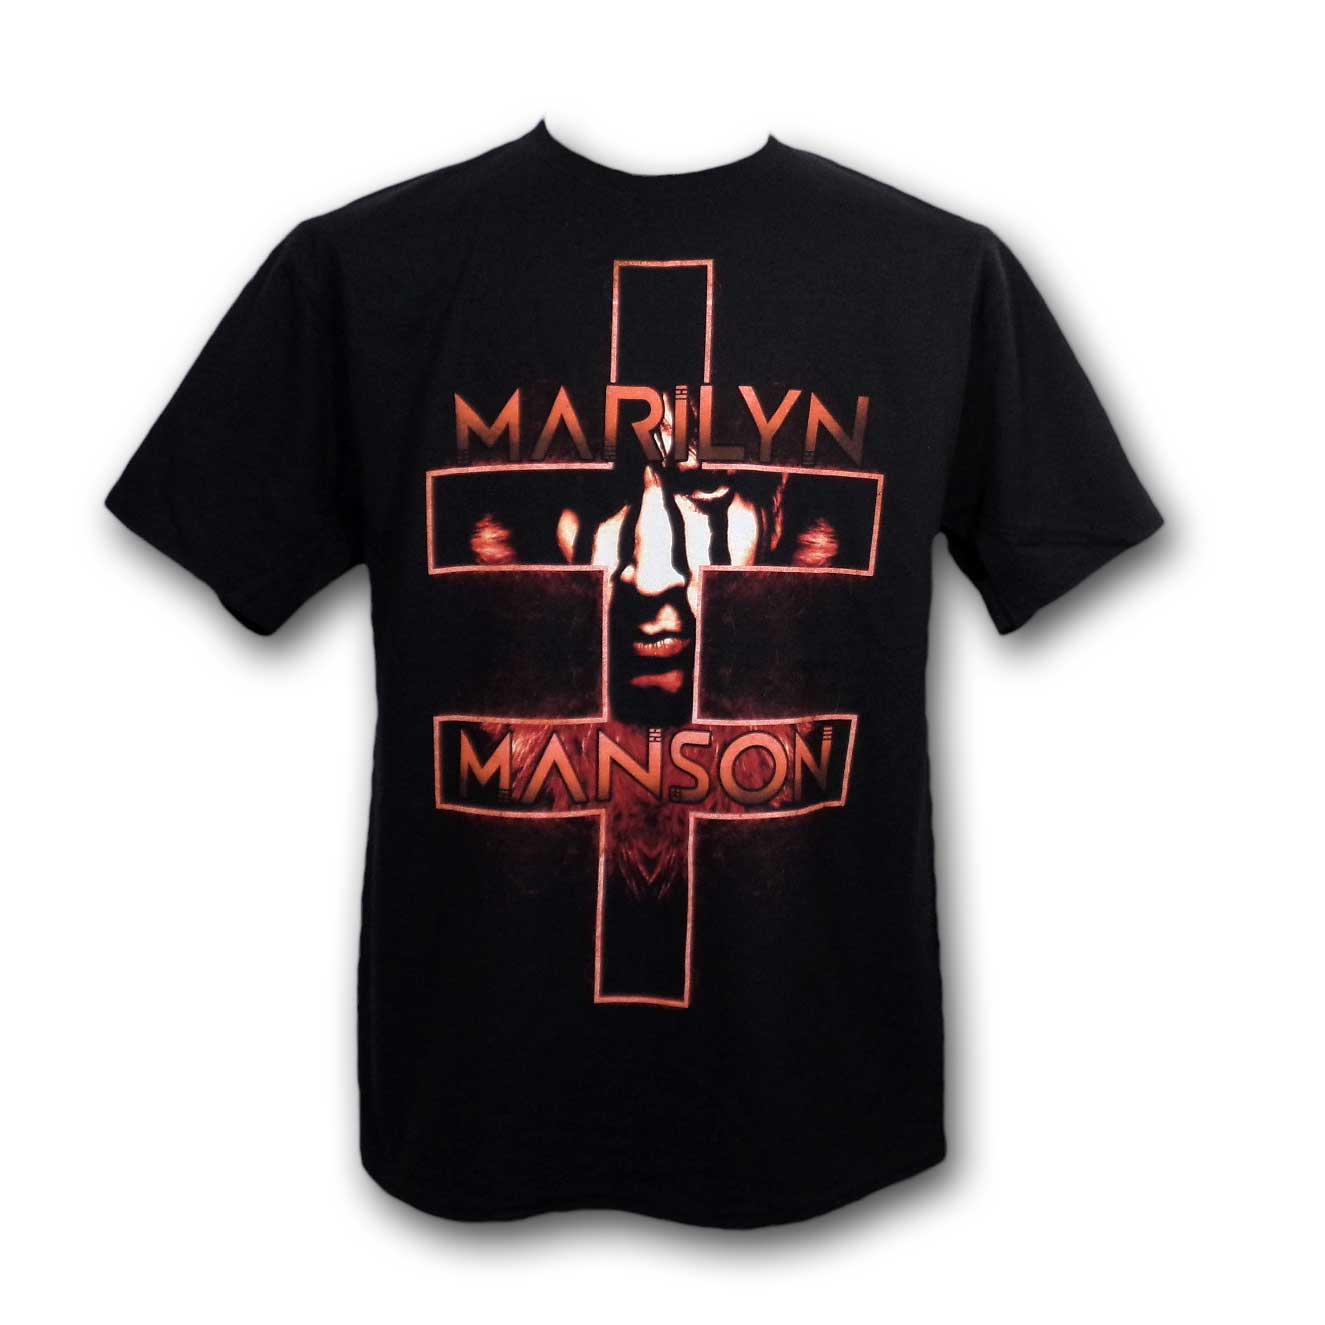 Marilyn Manson Tシャツ マリリン・マンソン Double Cross - バンドTシャツの通販ショップ『Tee-Merch!』